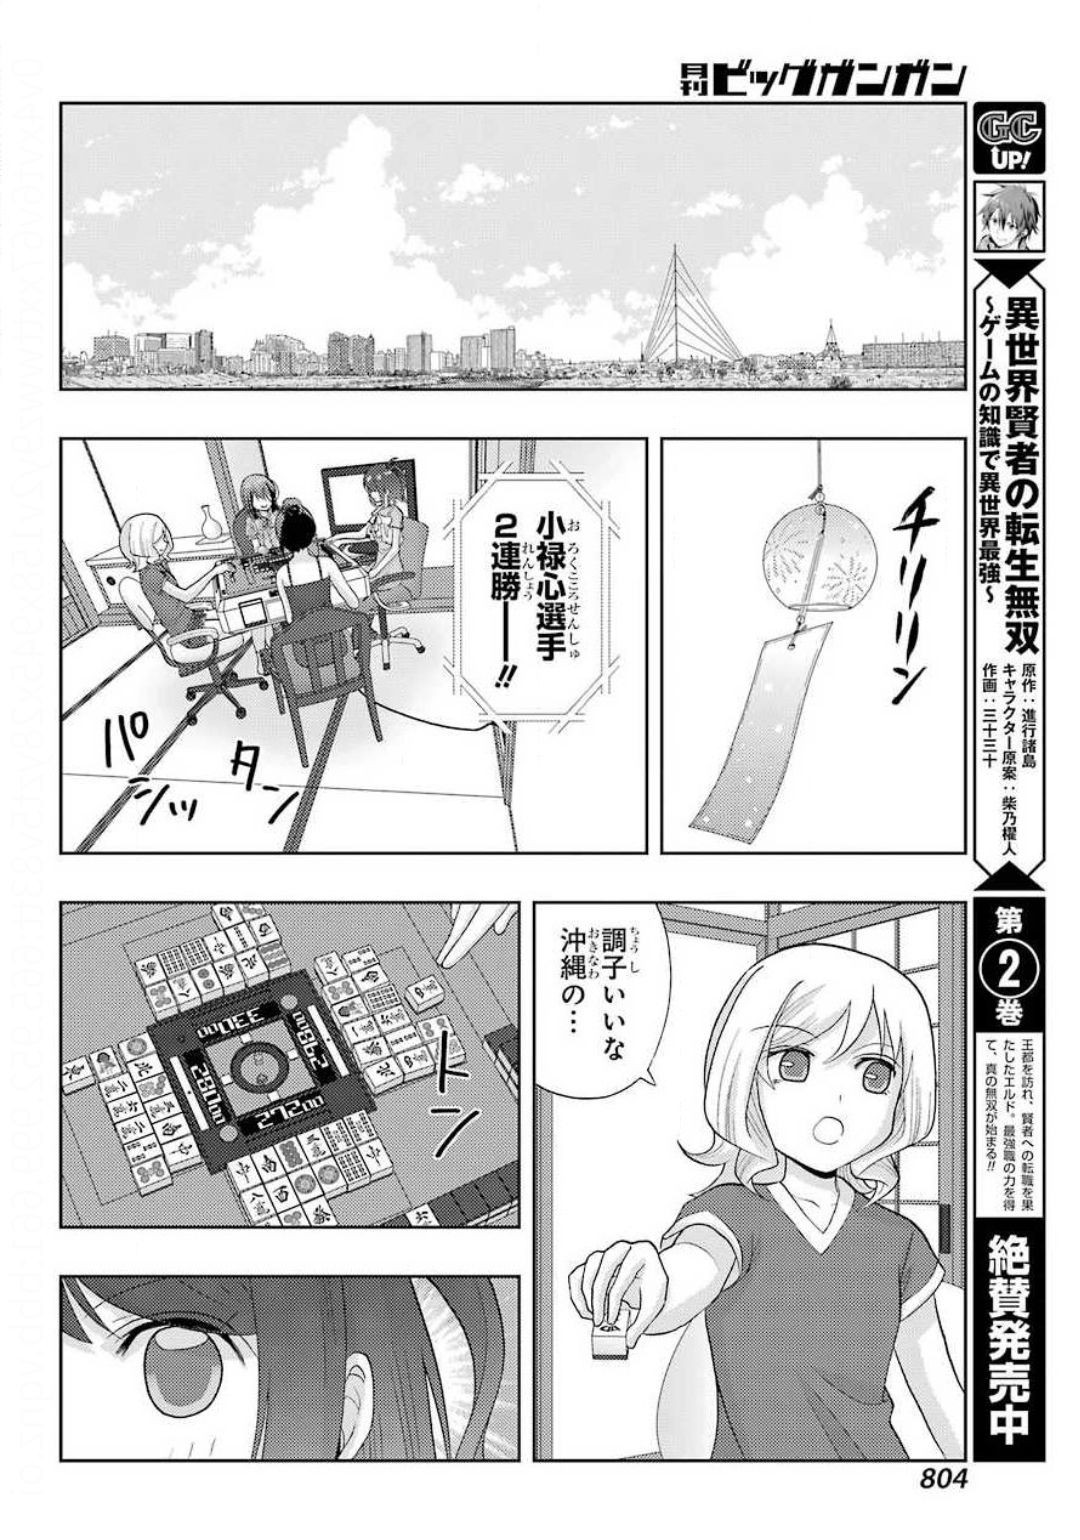 Shinohayu The Dawn Of Age Manga Chapter 0 Page 22 Raw Sen Manga